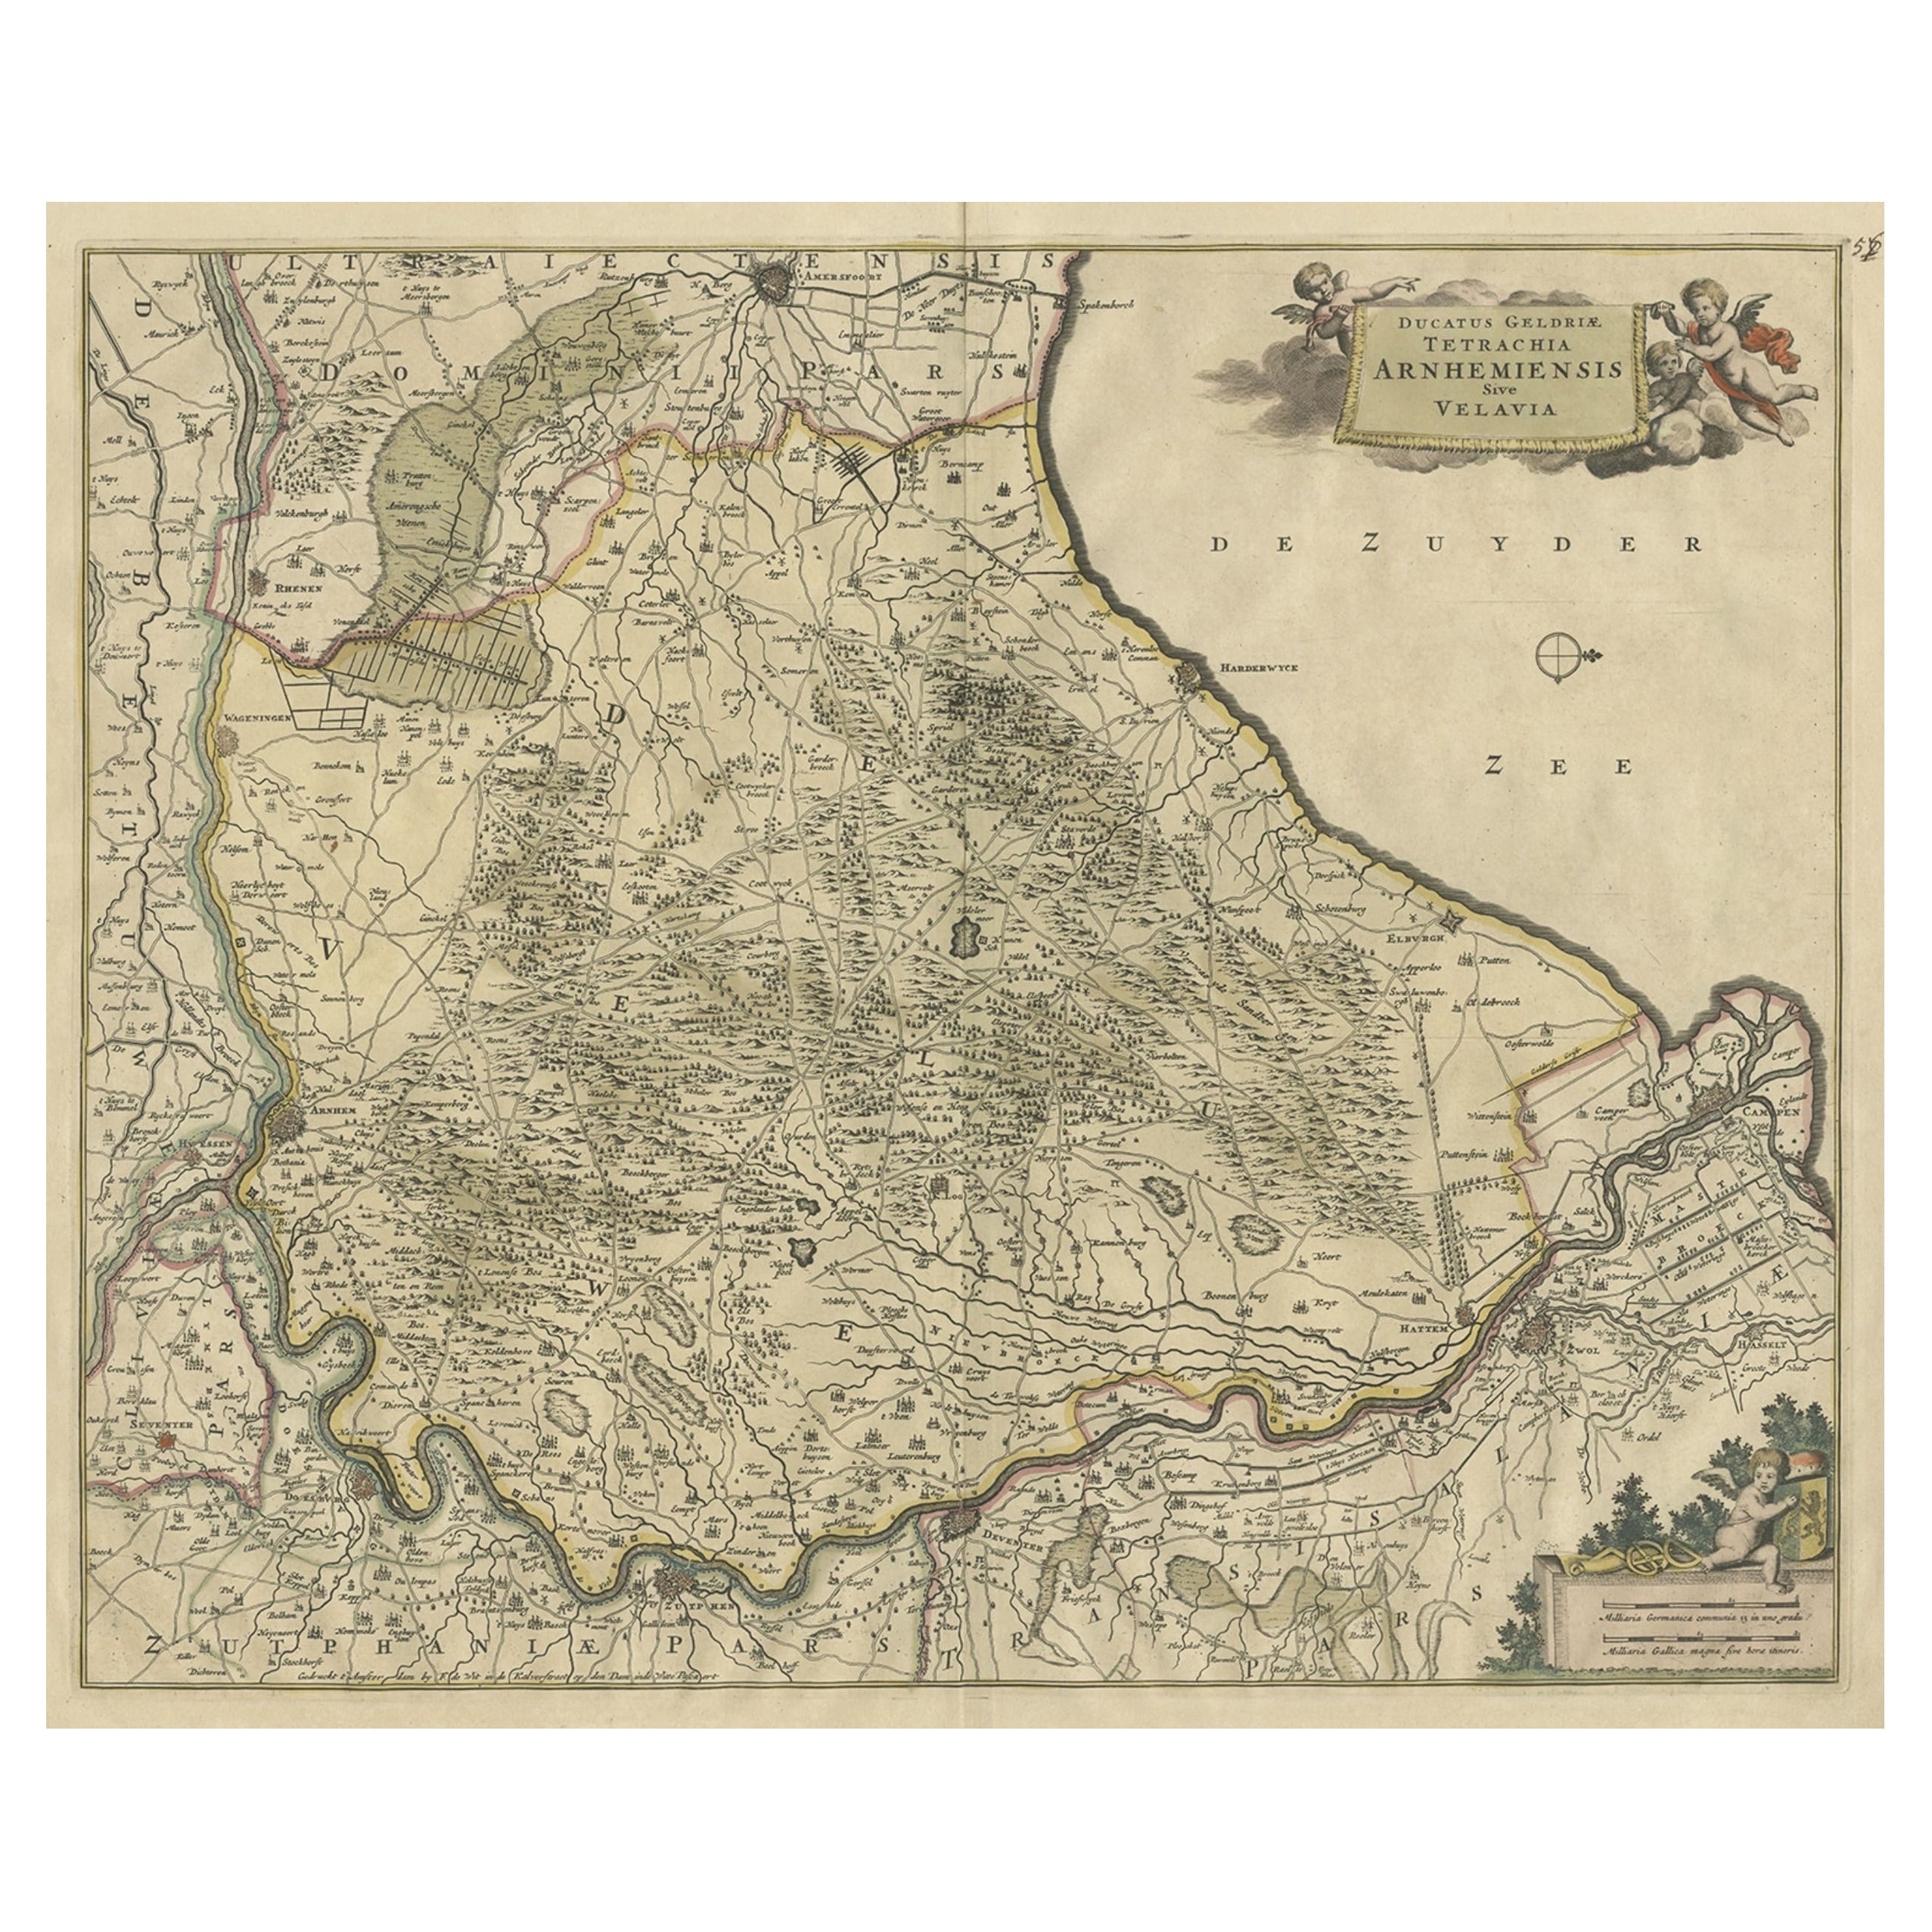 Beautiful Map of Arnhem and the Veluwe Region, Gelderland, The Netherlands, 1690